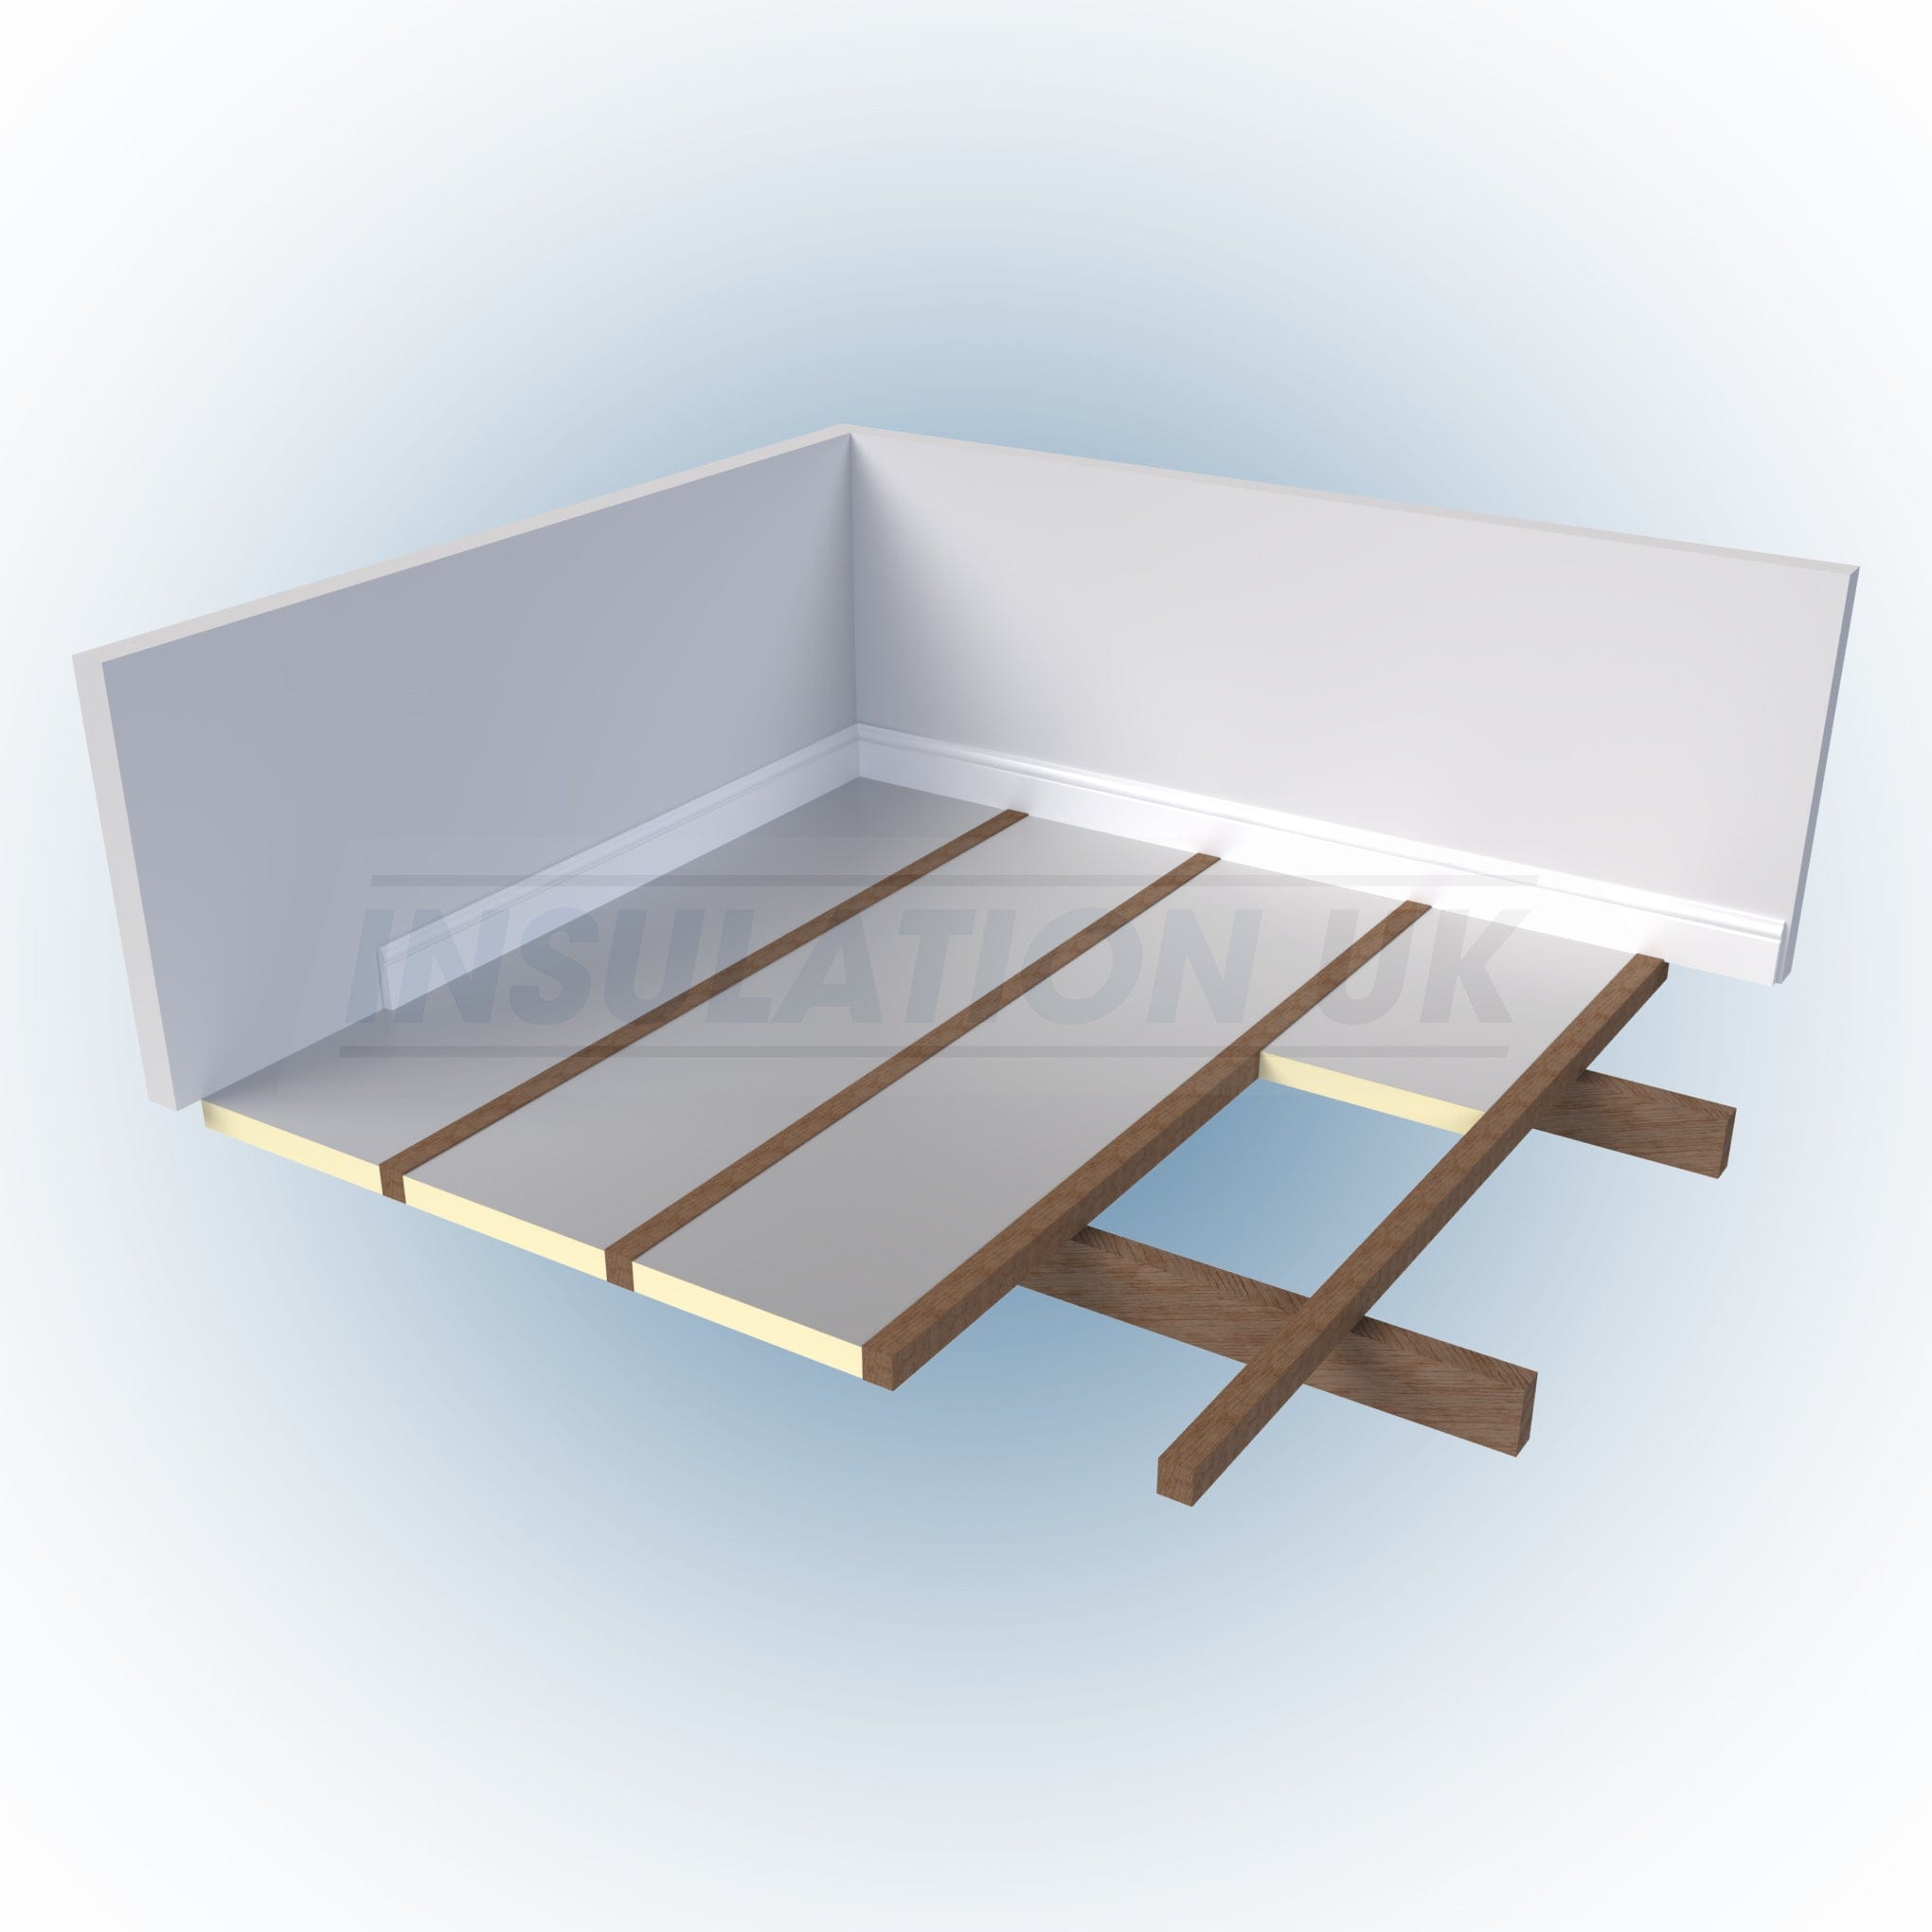 InsulationUK Pir Insulation Strips PIR Insulation Strips | 2400mm x 600mm | Pack of 2